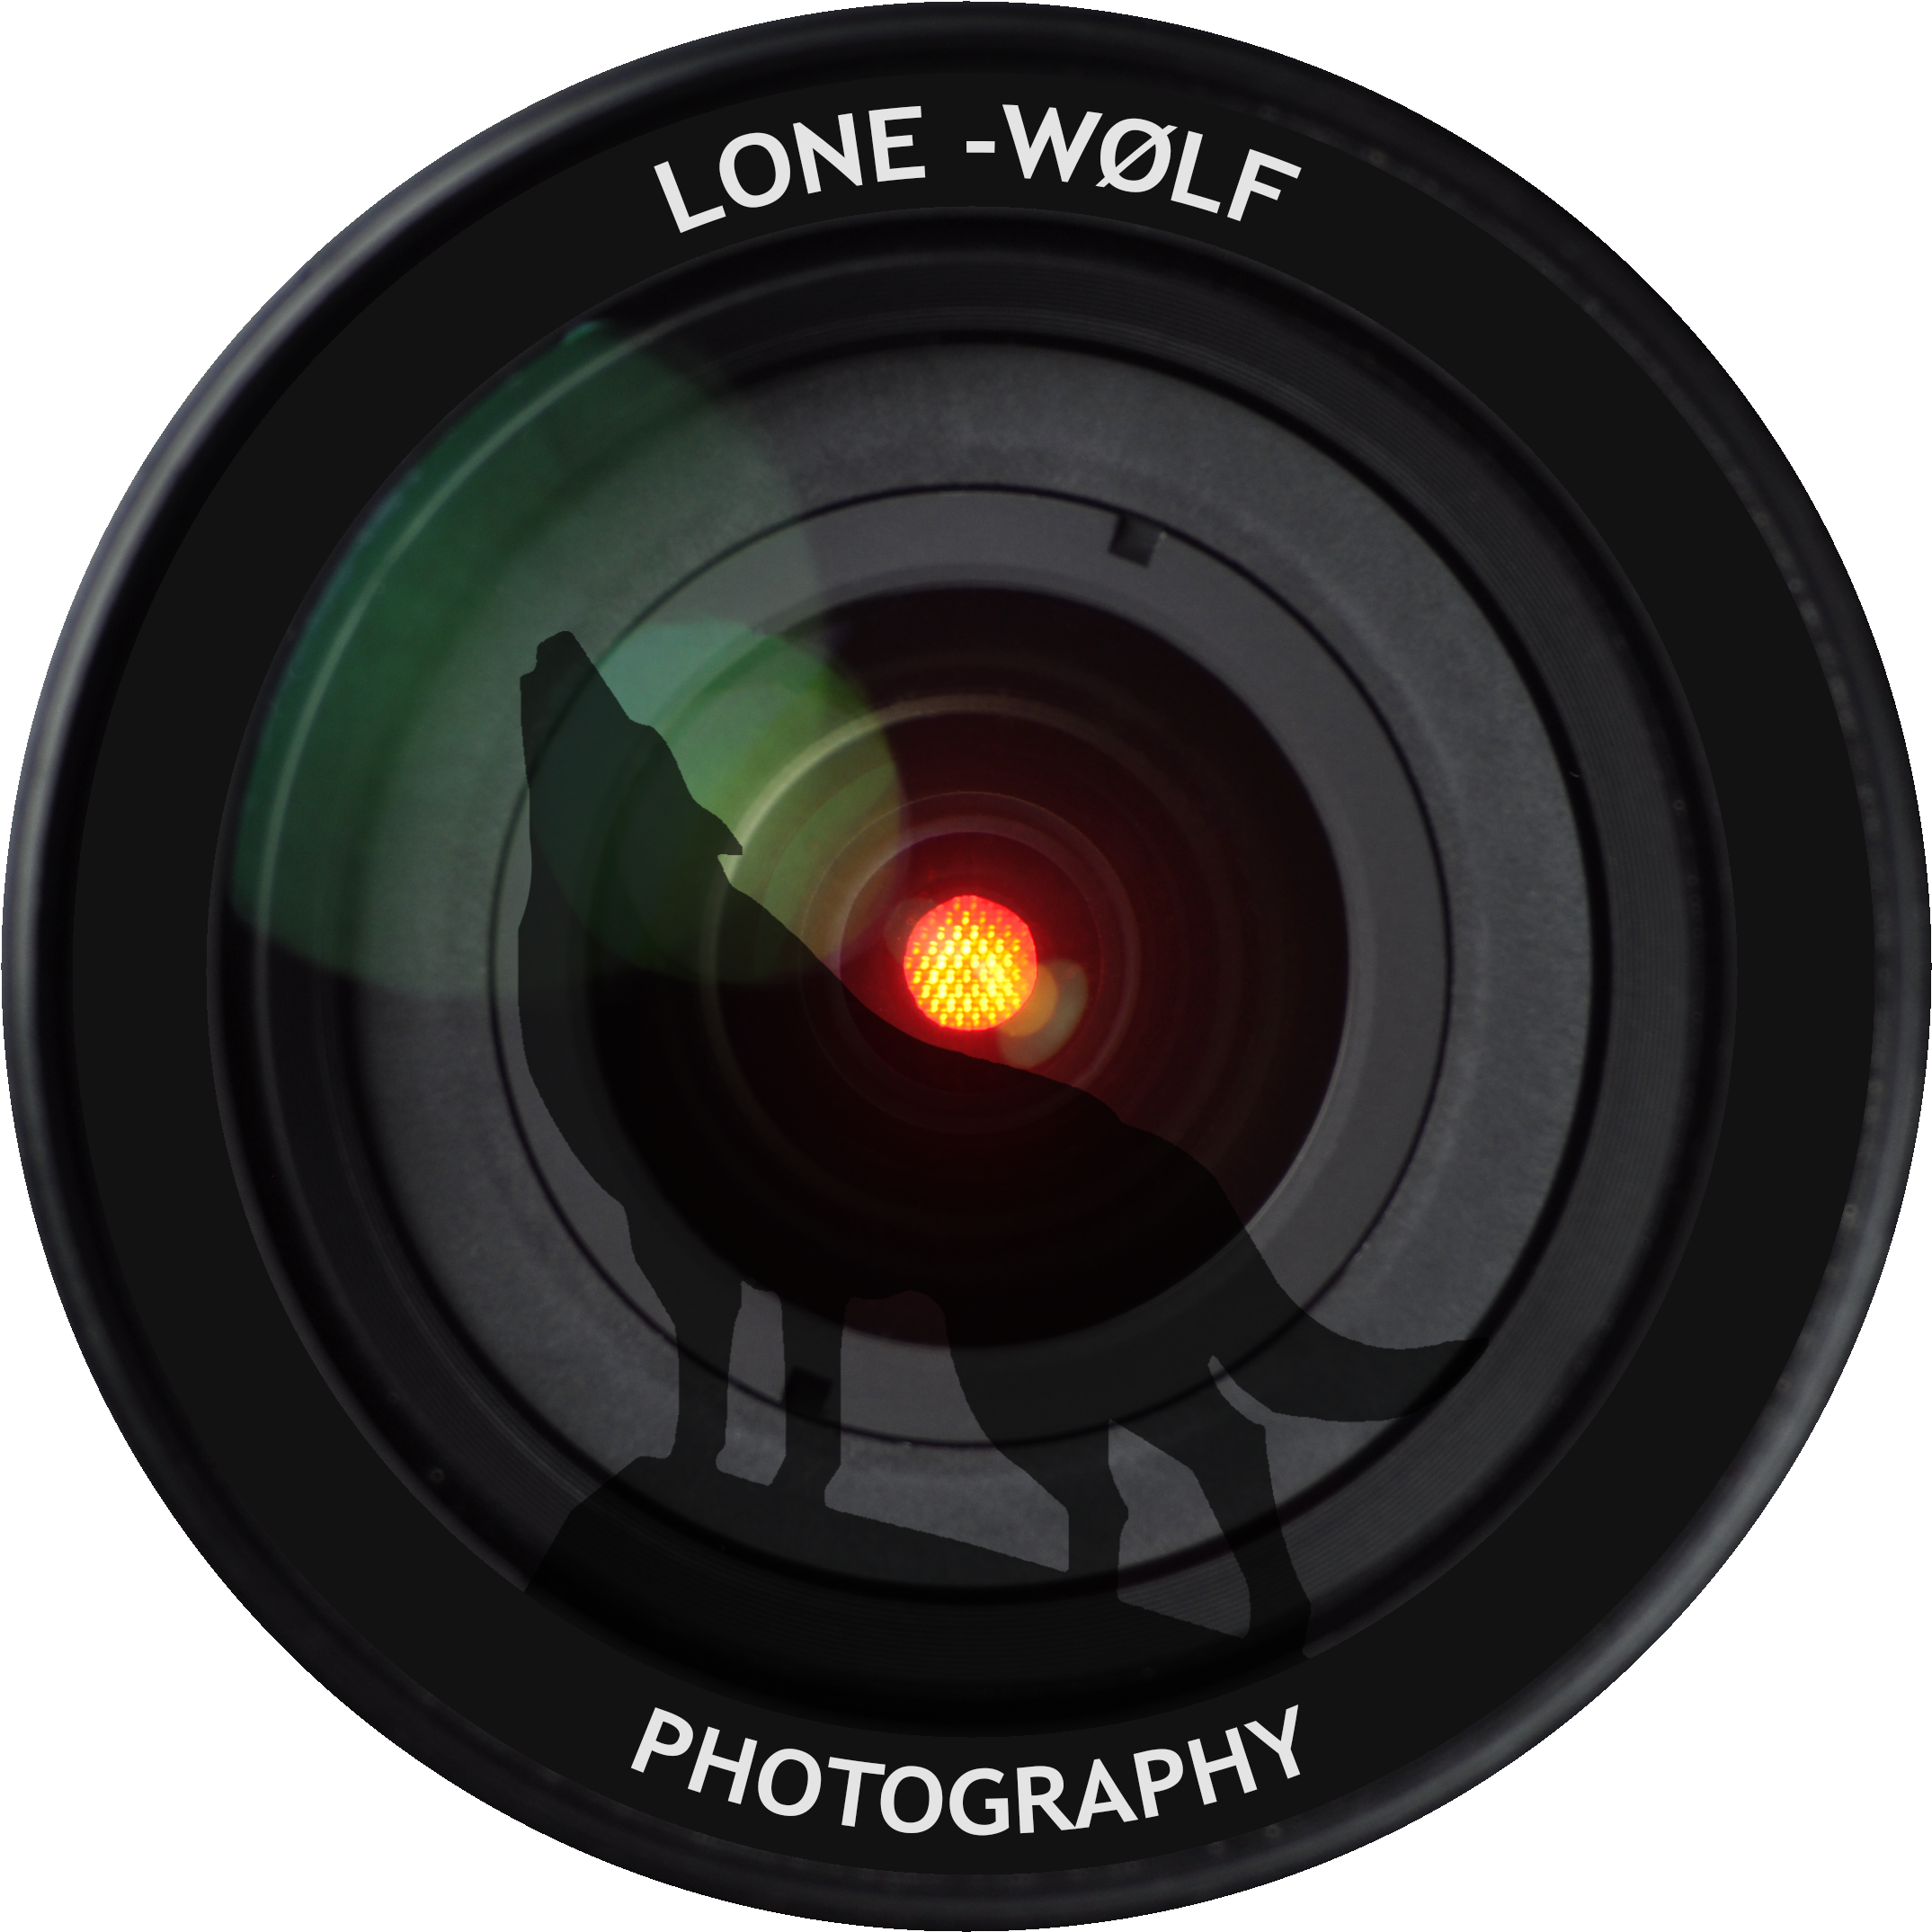 Lone-wolf Photography Logo By Jamezzz92 - Photography (2352x2352)